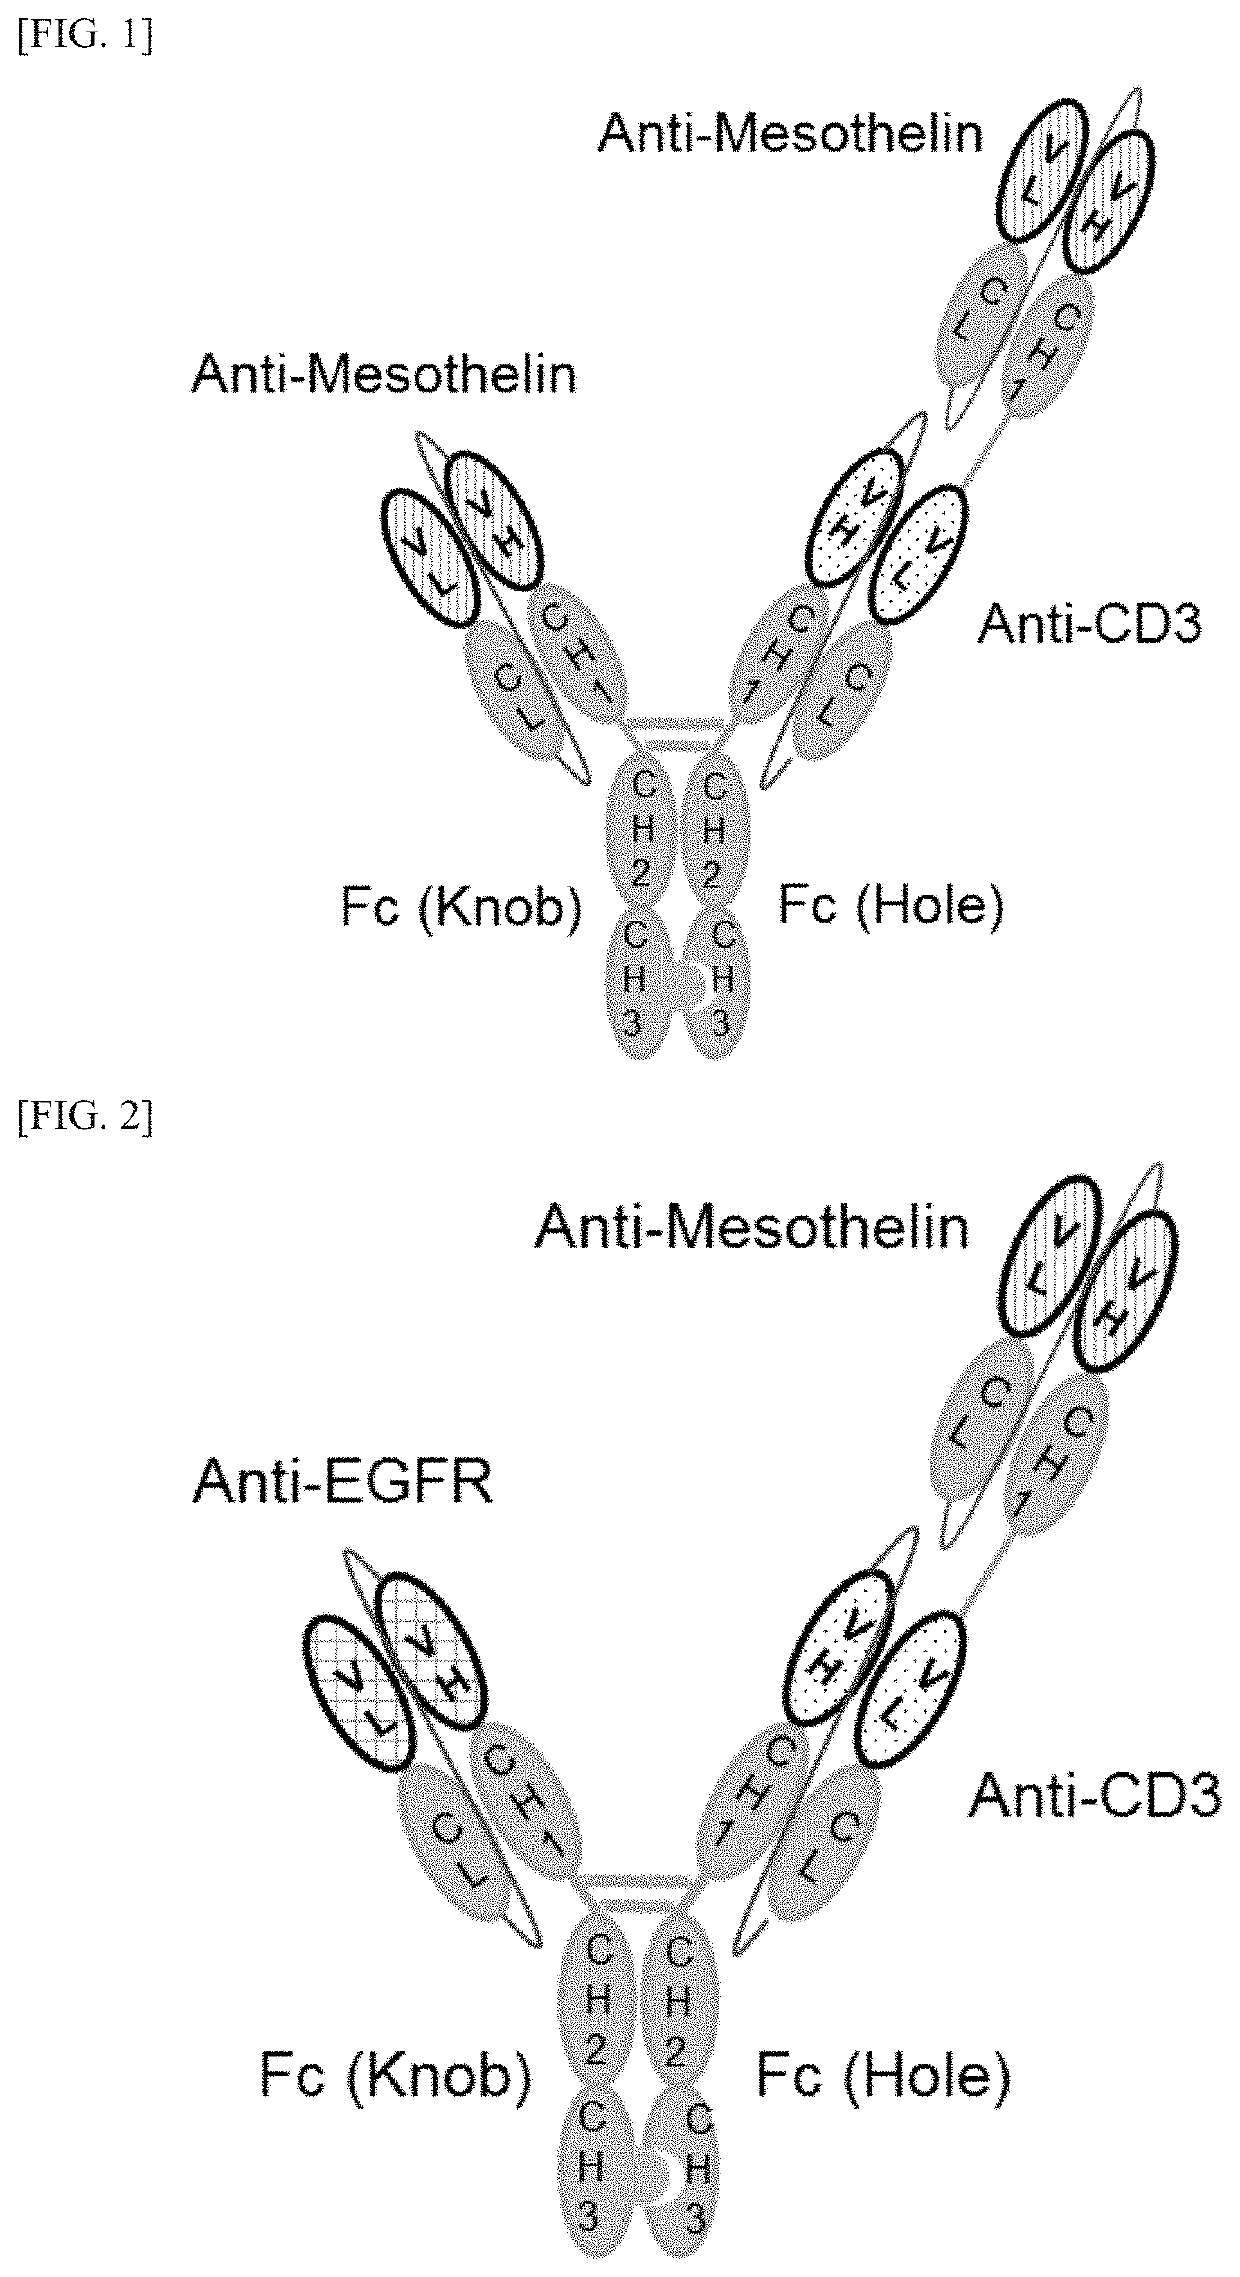 Fusion protein comprising Anti-mesothelin antibody, Anti-cd3 antibody or Anti-egfr antibody, bispecific or trispecific antibody comprising same, and uses thereof